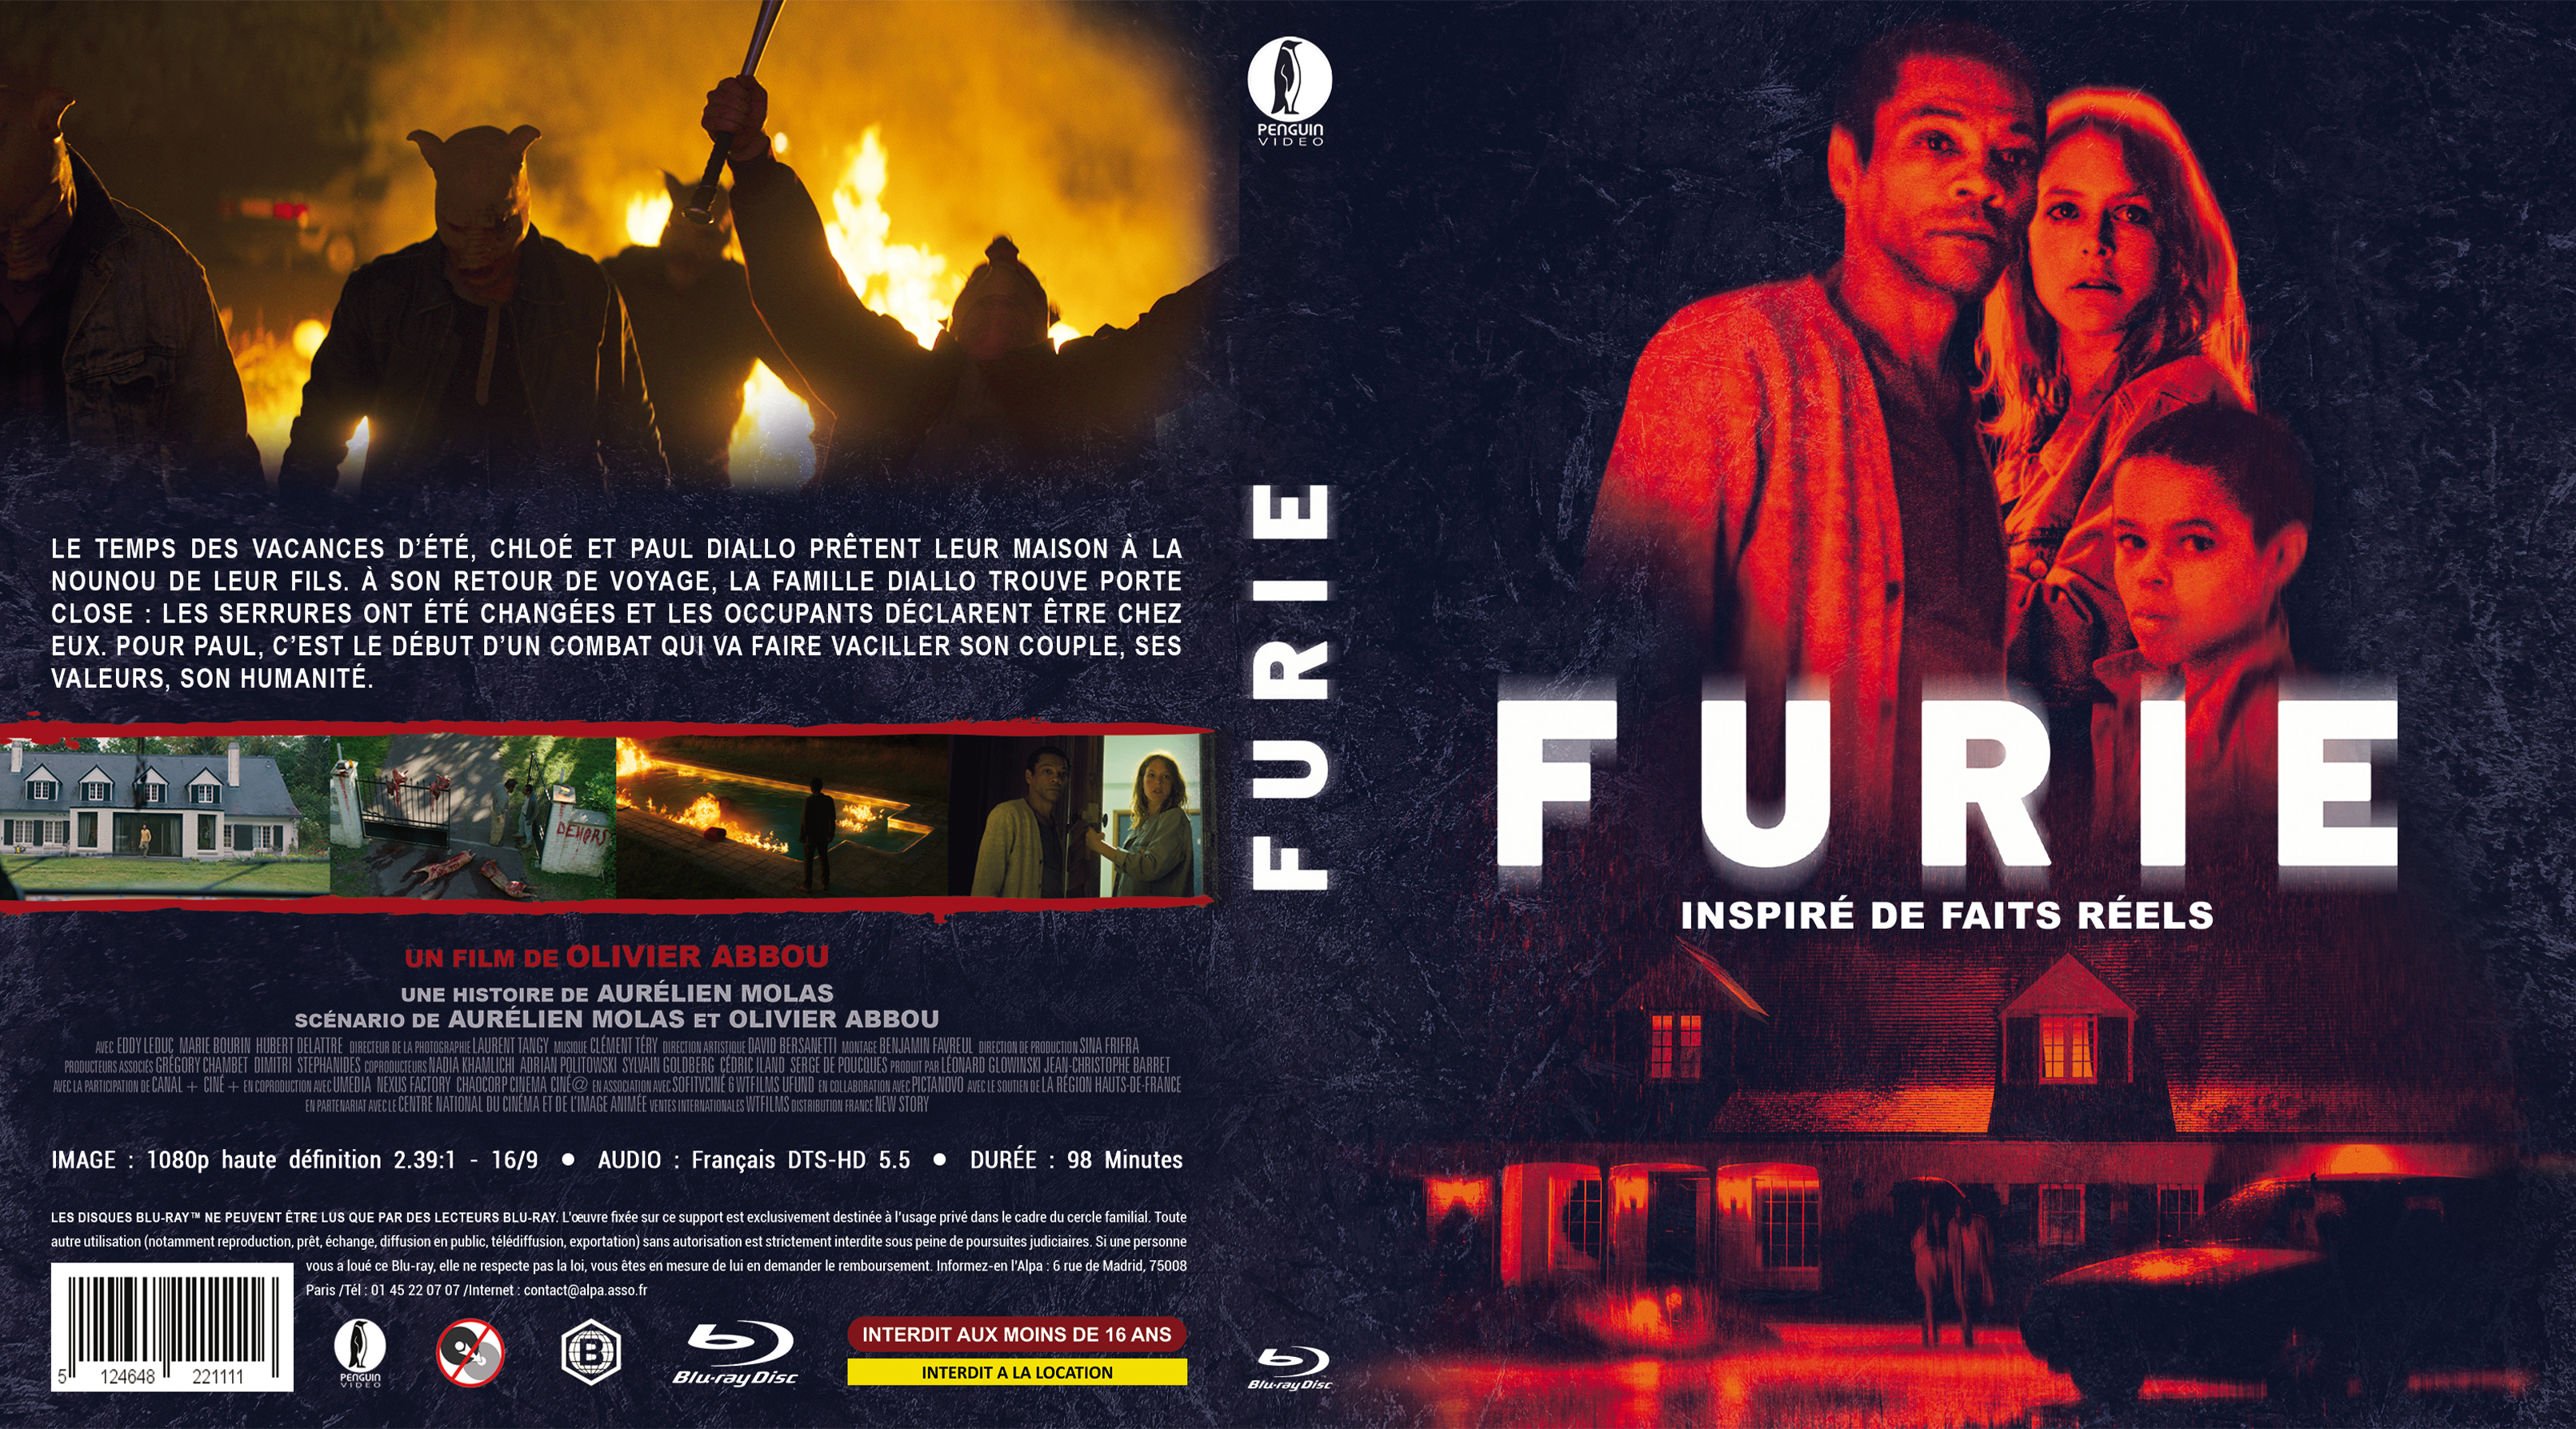 Jaquette DVD Furie 2019 custom (BLU-RAY)